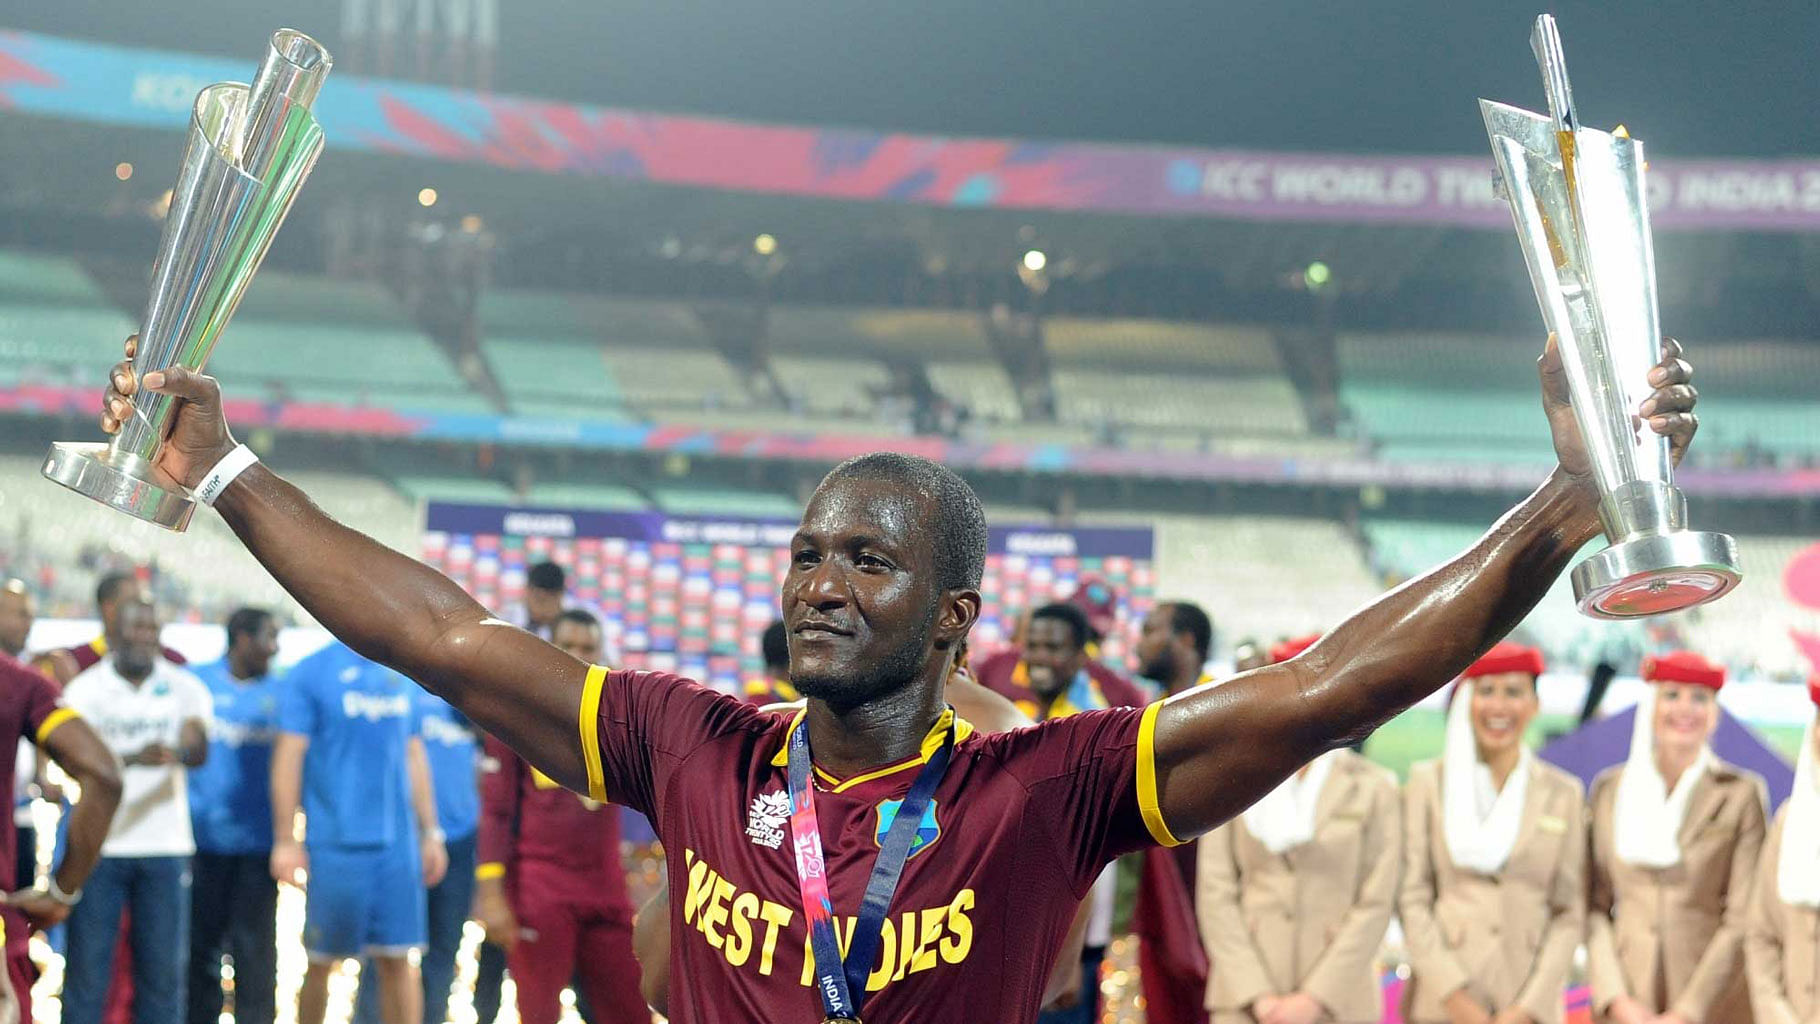 Former West Indies captain Darren Sammy has urged the cricket community to speak out on George Floyd’s death.